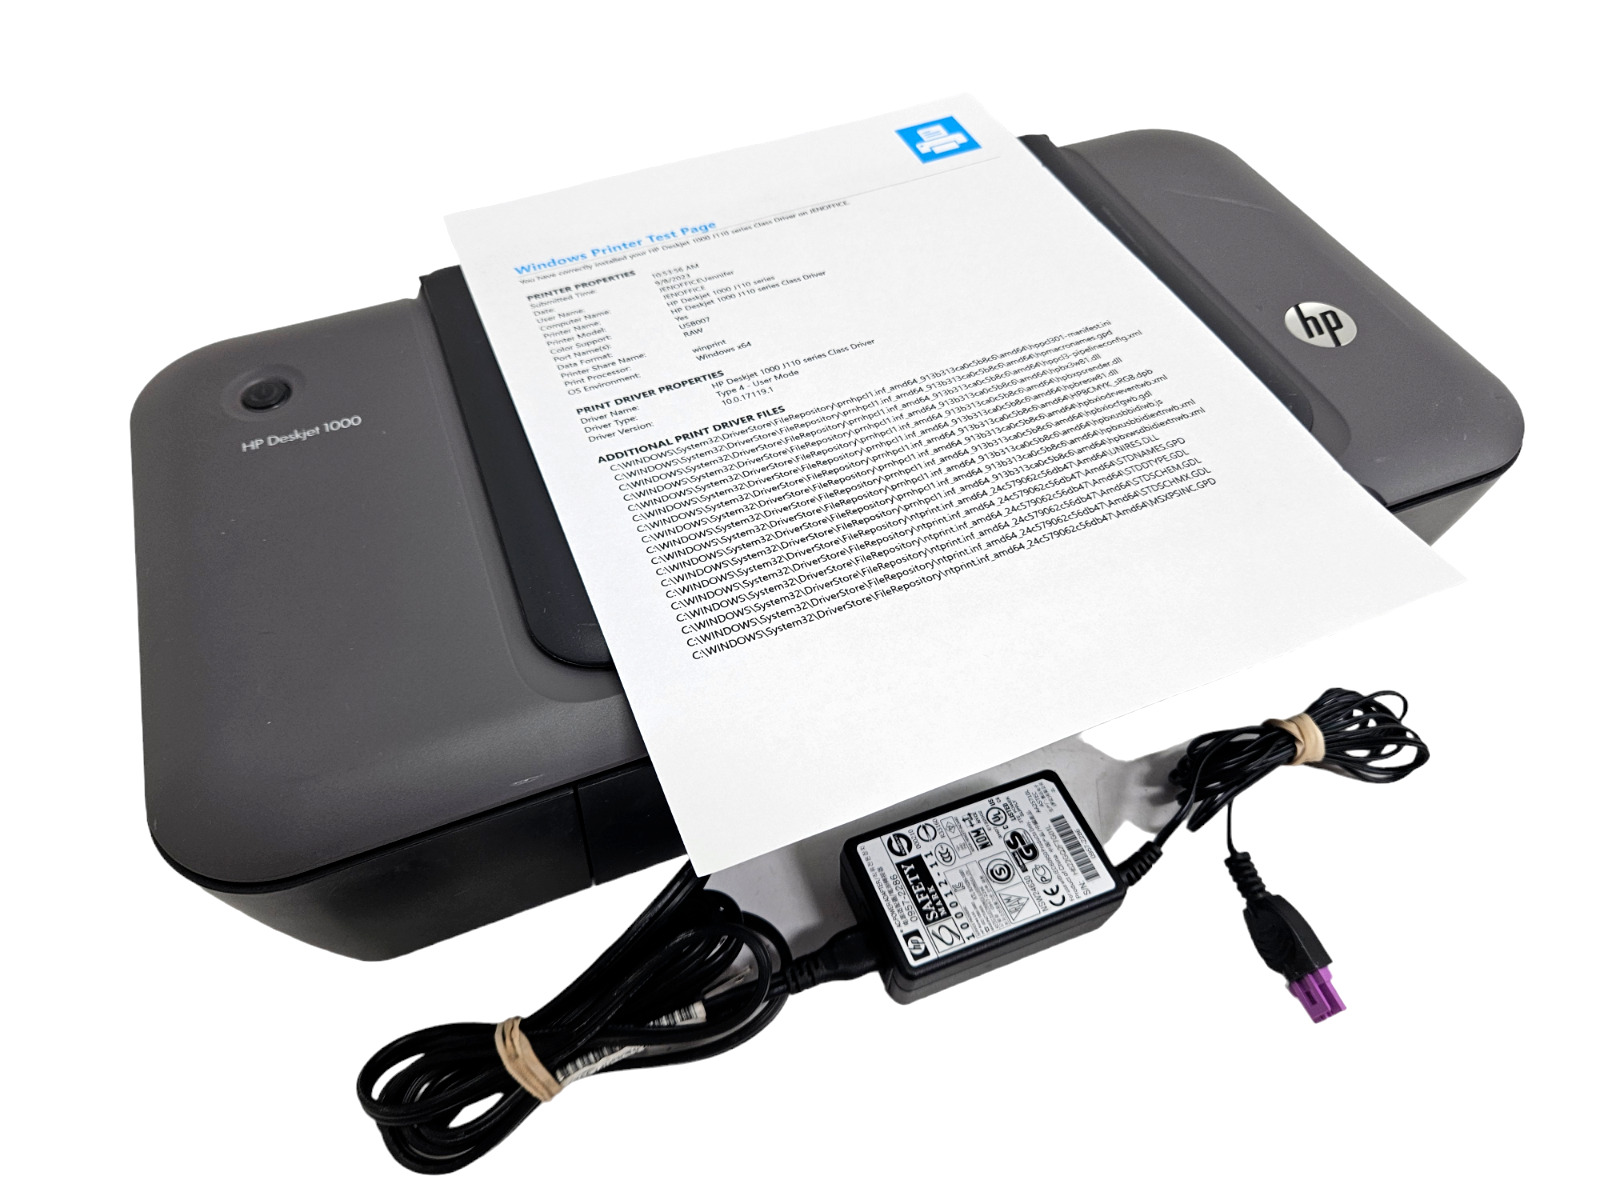 HP Deskjet 1000 J110a Standard Color Inkjet Printer